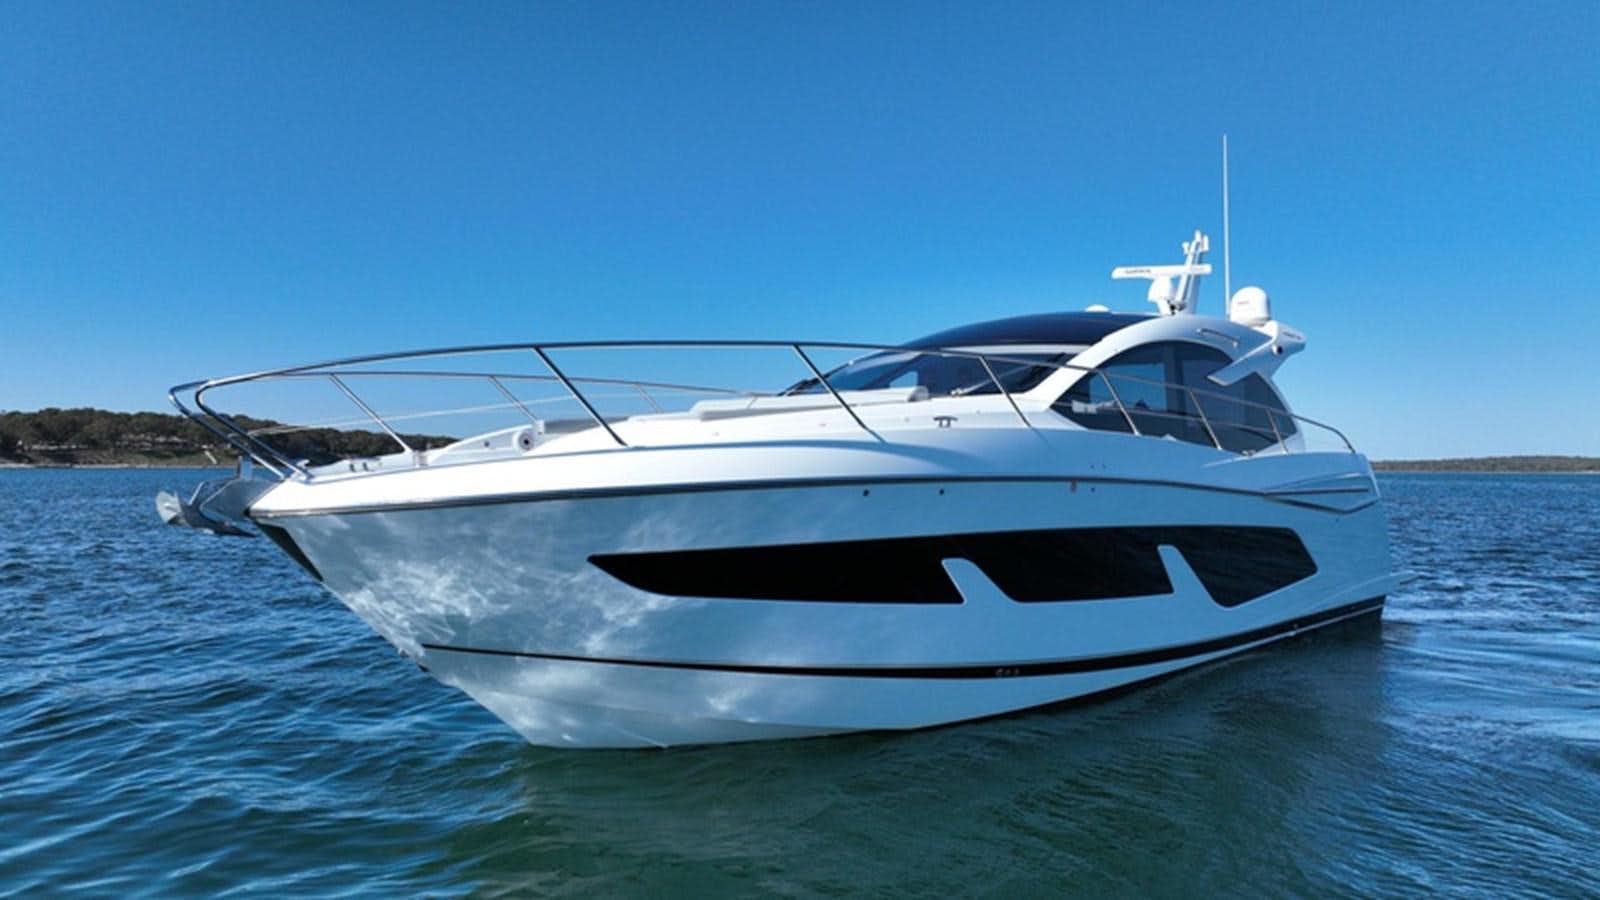 2019 sunseeker 50 predator
Yacht for Sale